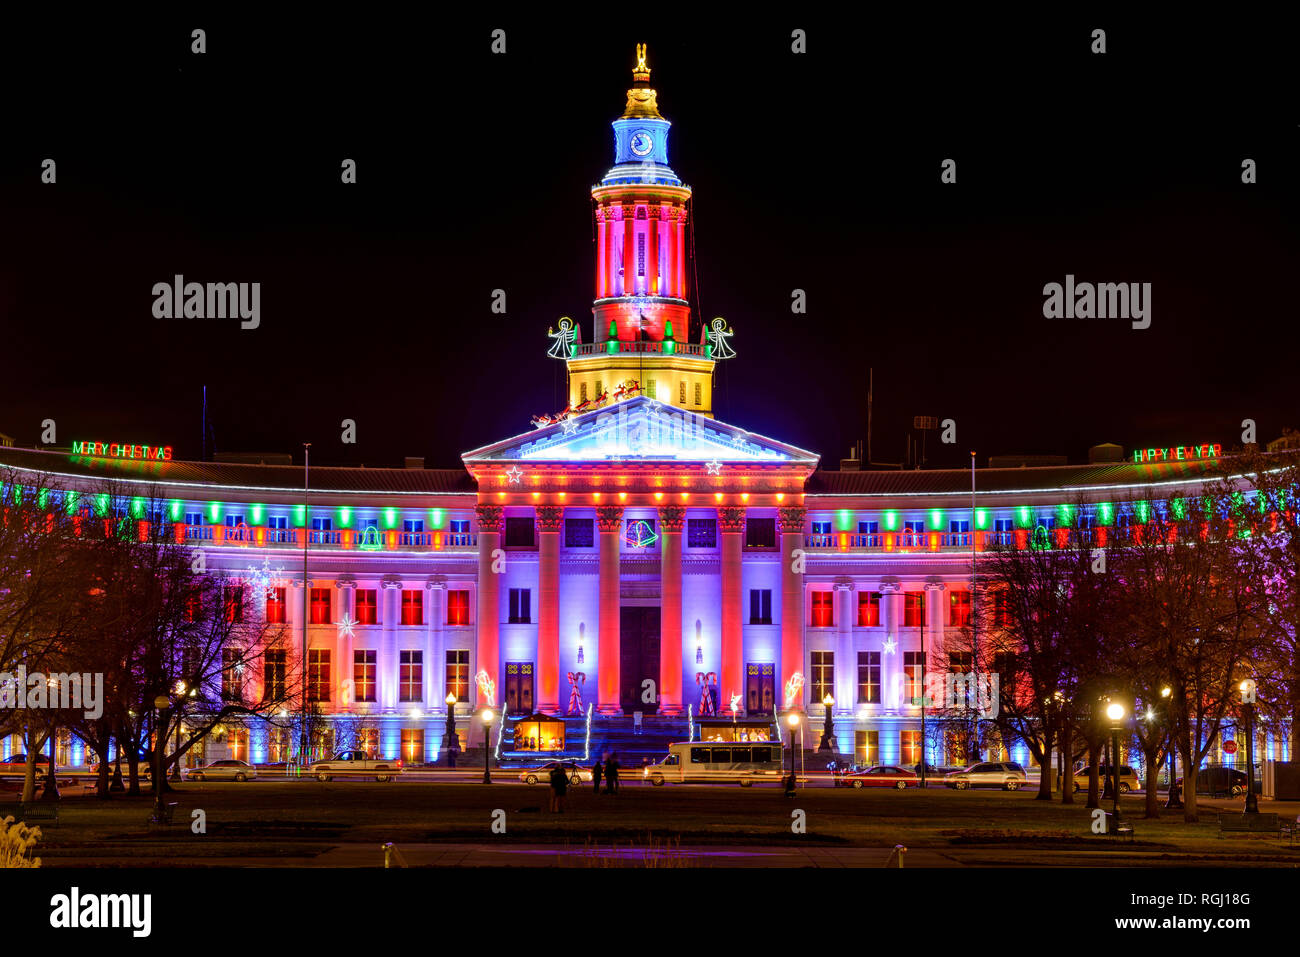 Dezember Nacht in Denver City Hall - Dezember Nacht Blick auf Denver City und County Building am Civic Center, Denver, Colorado, USA. Stockfoto